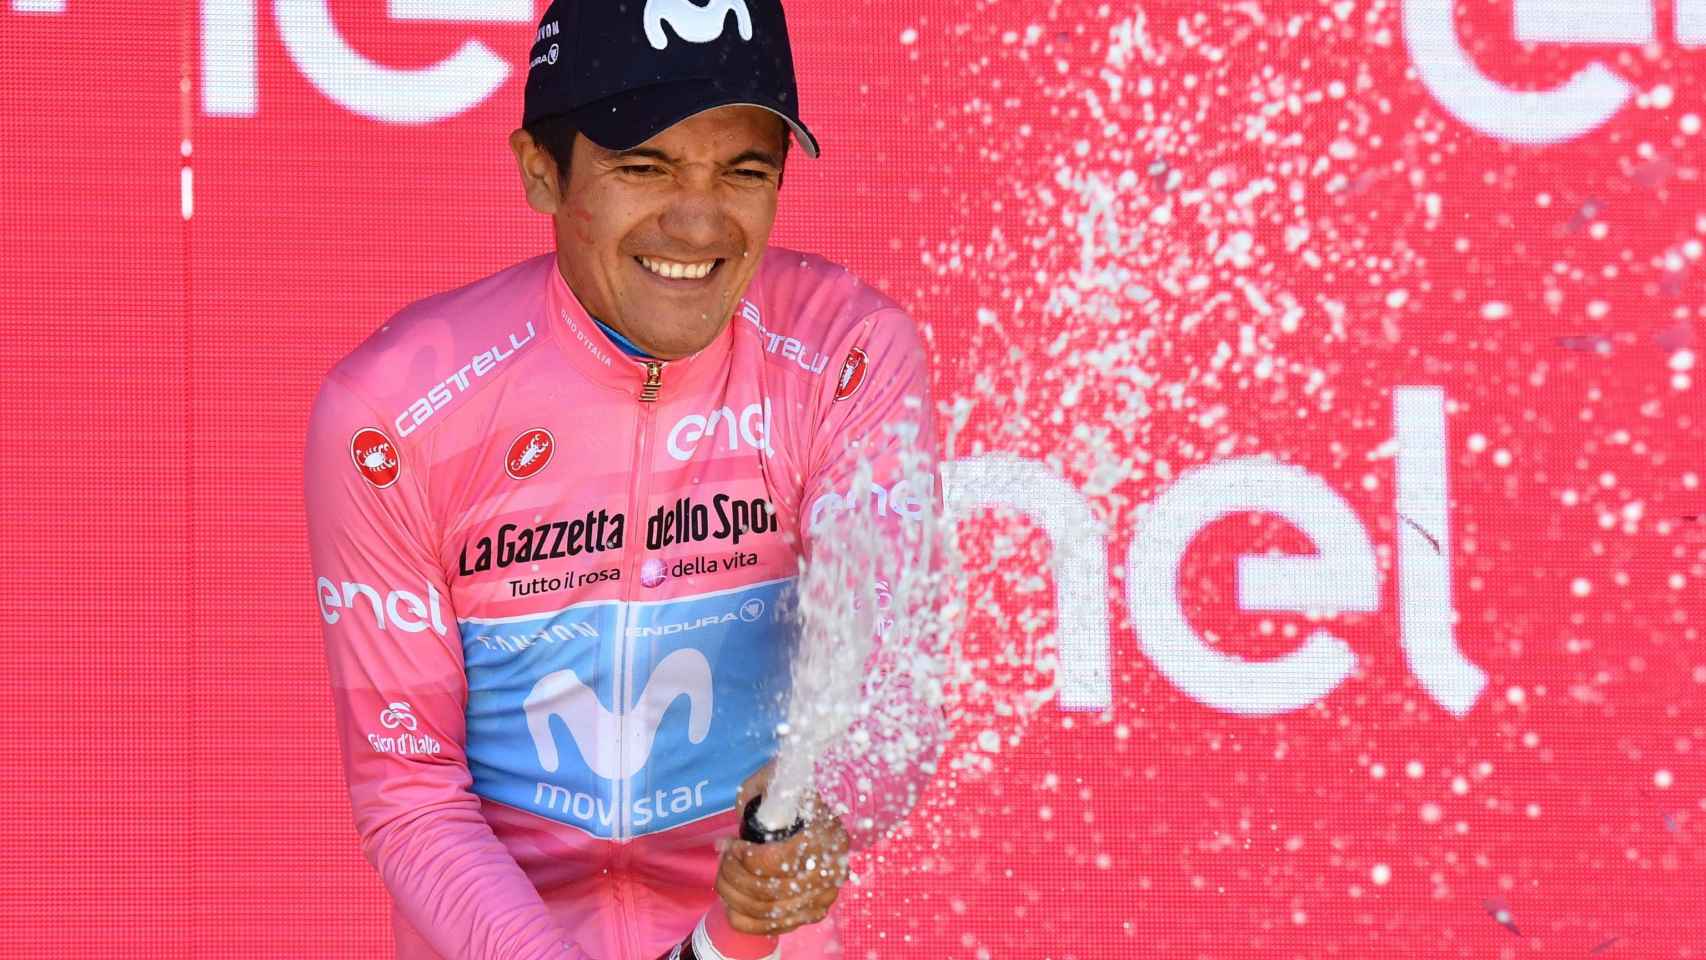 Richard Carapaz gana el Giro de Italia